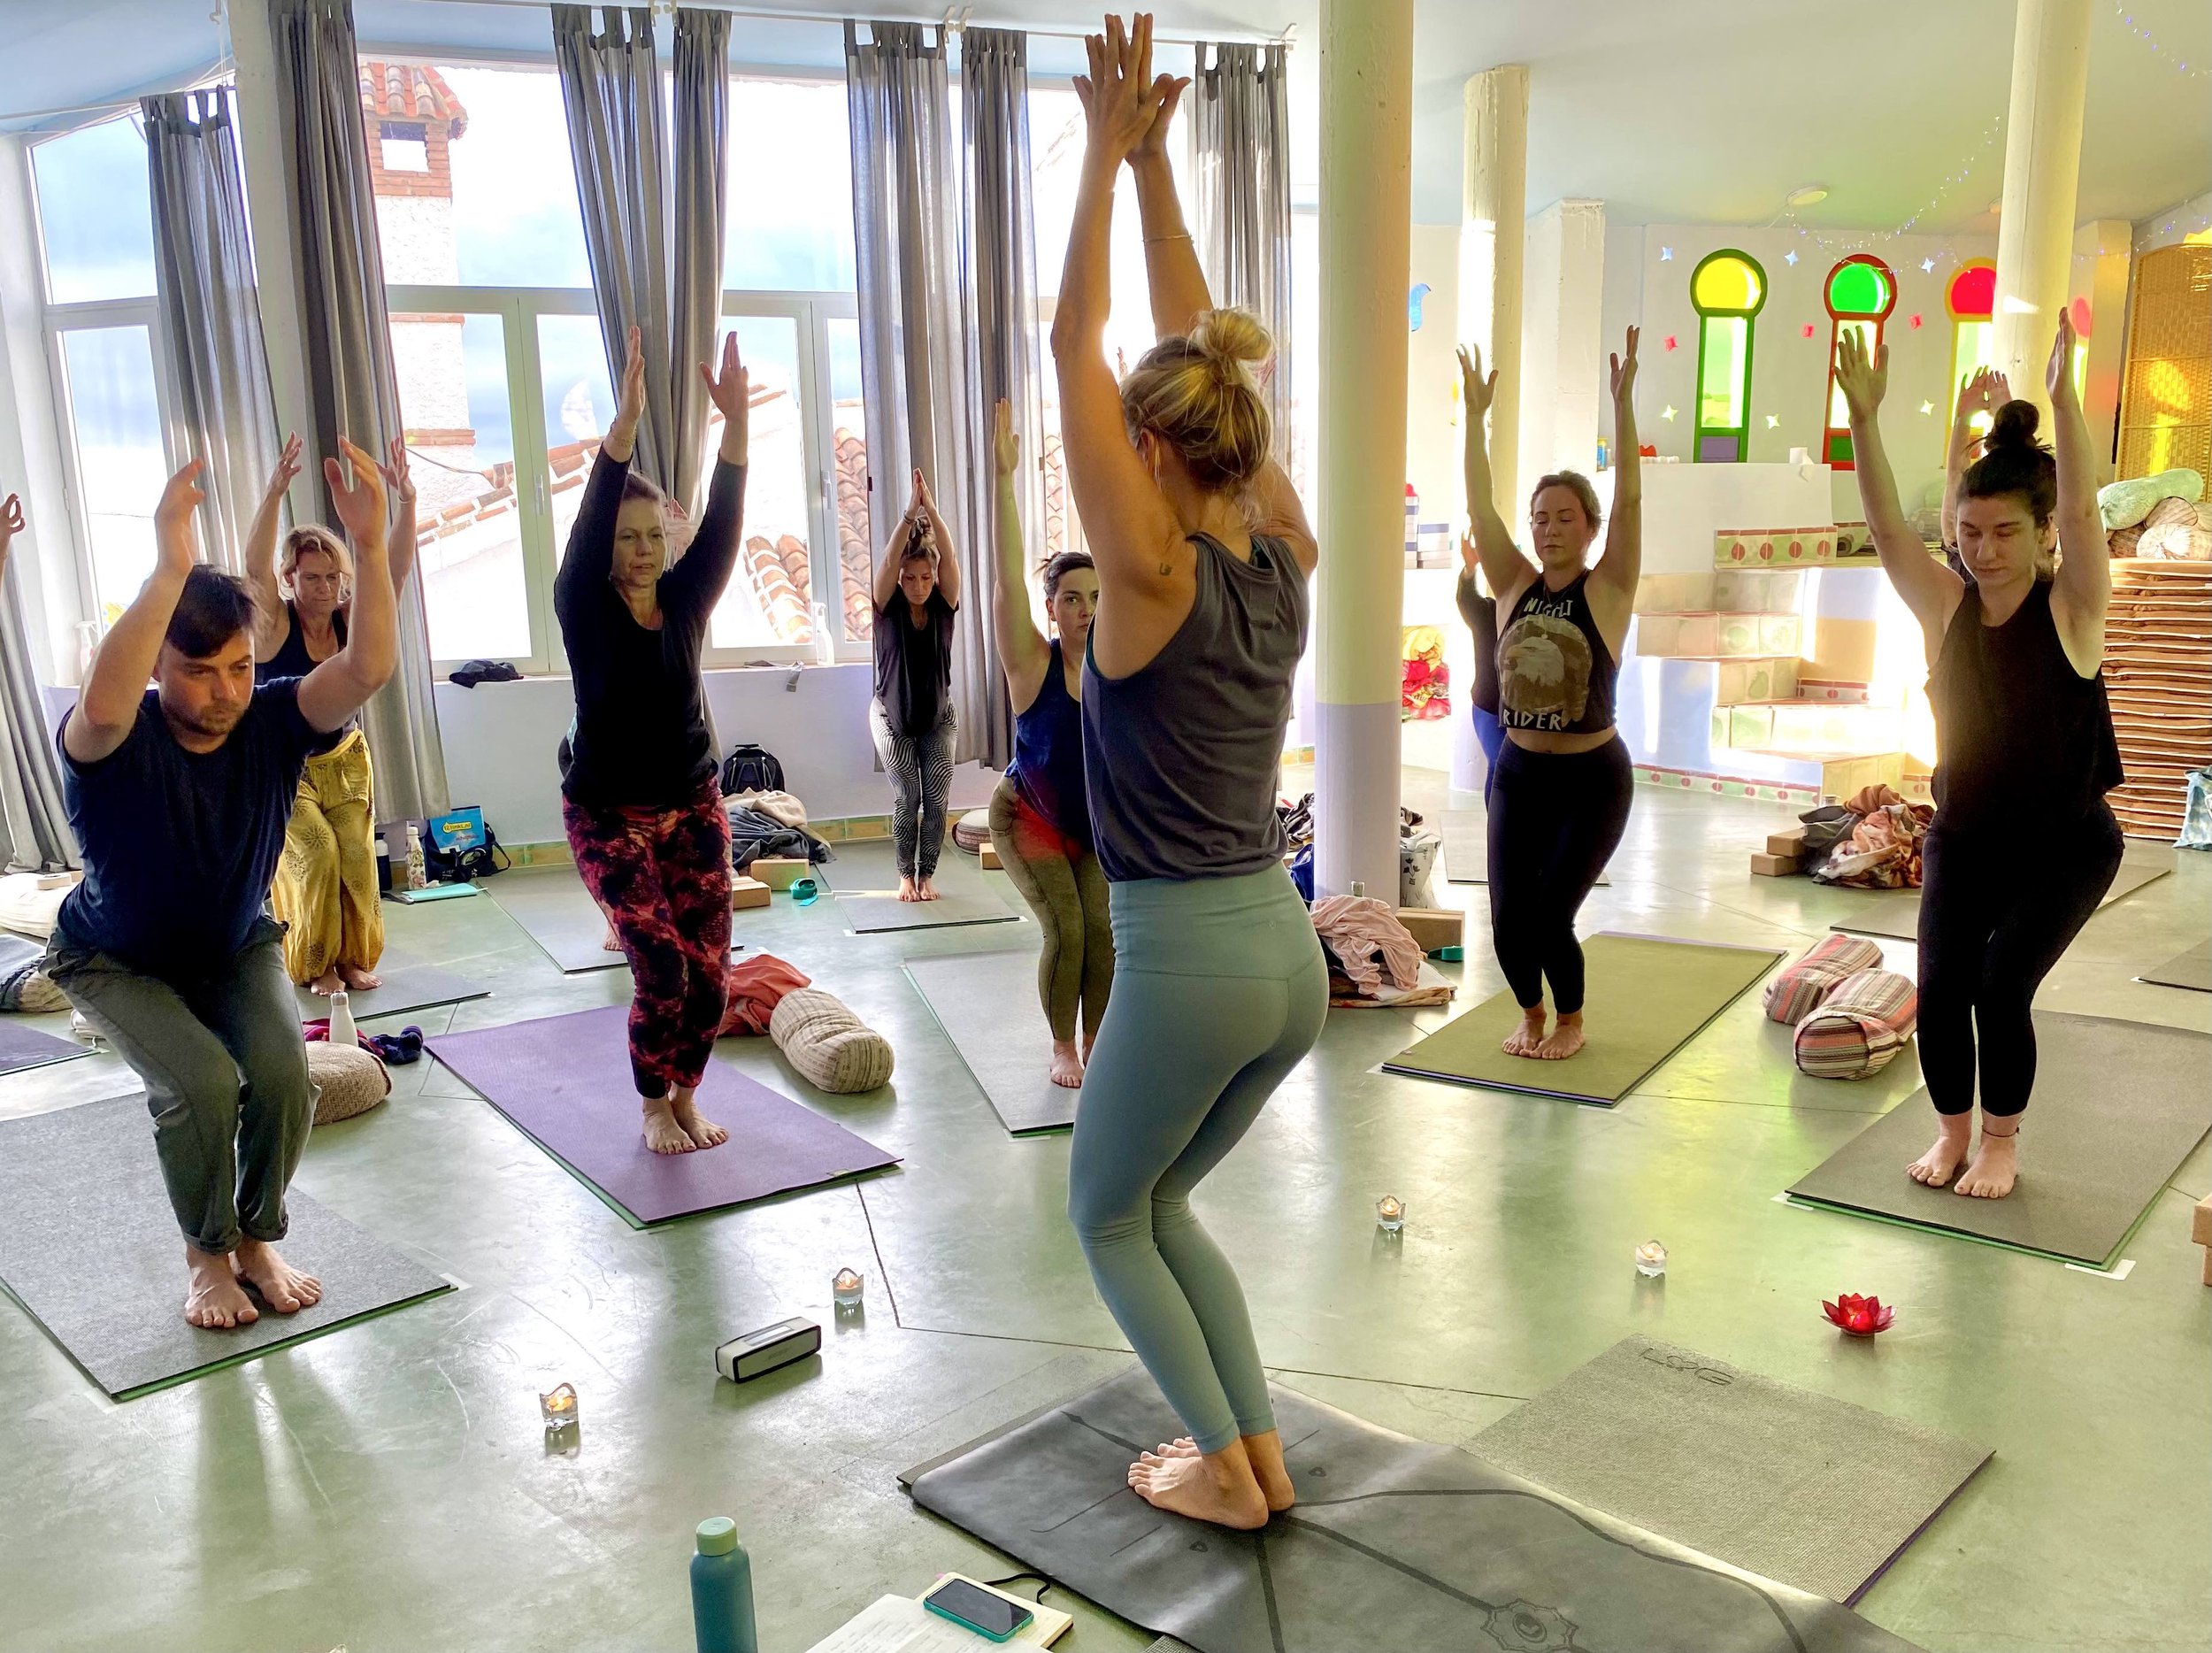 Flow ~ 50h Yang Yoga , Vinyasa flow, TTC on Curacao — Jane Bakx Yoga